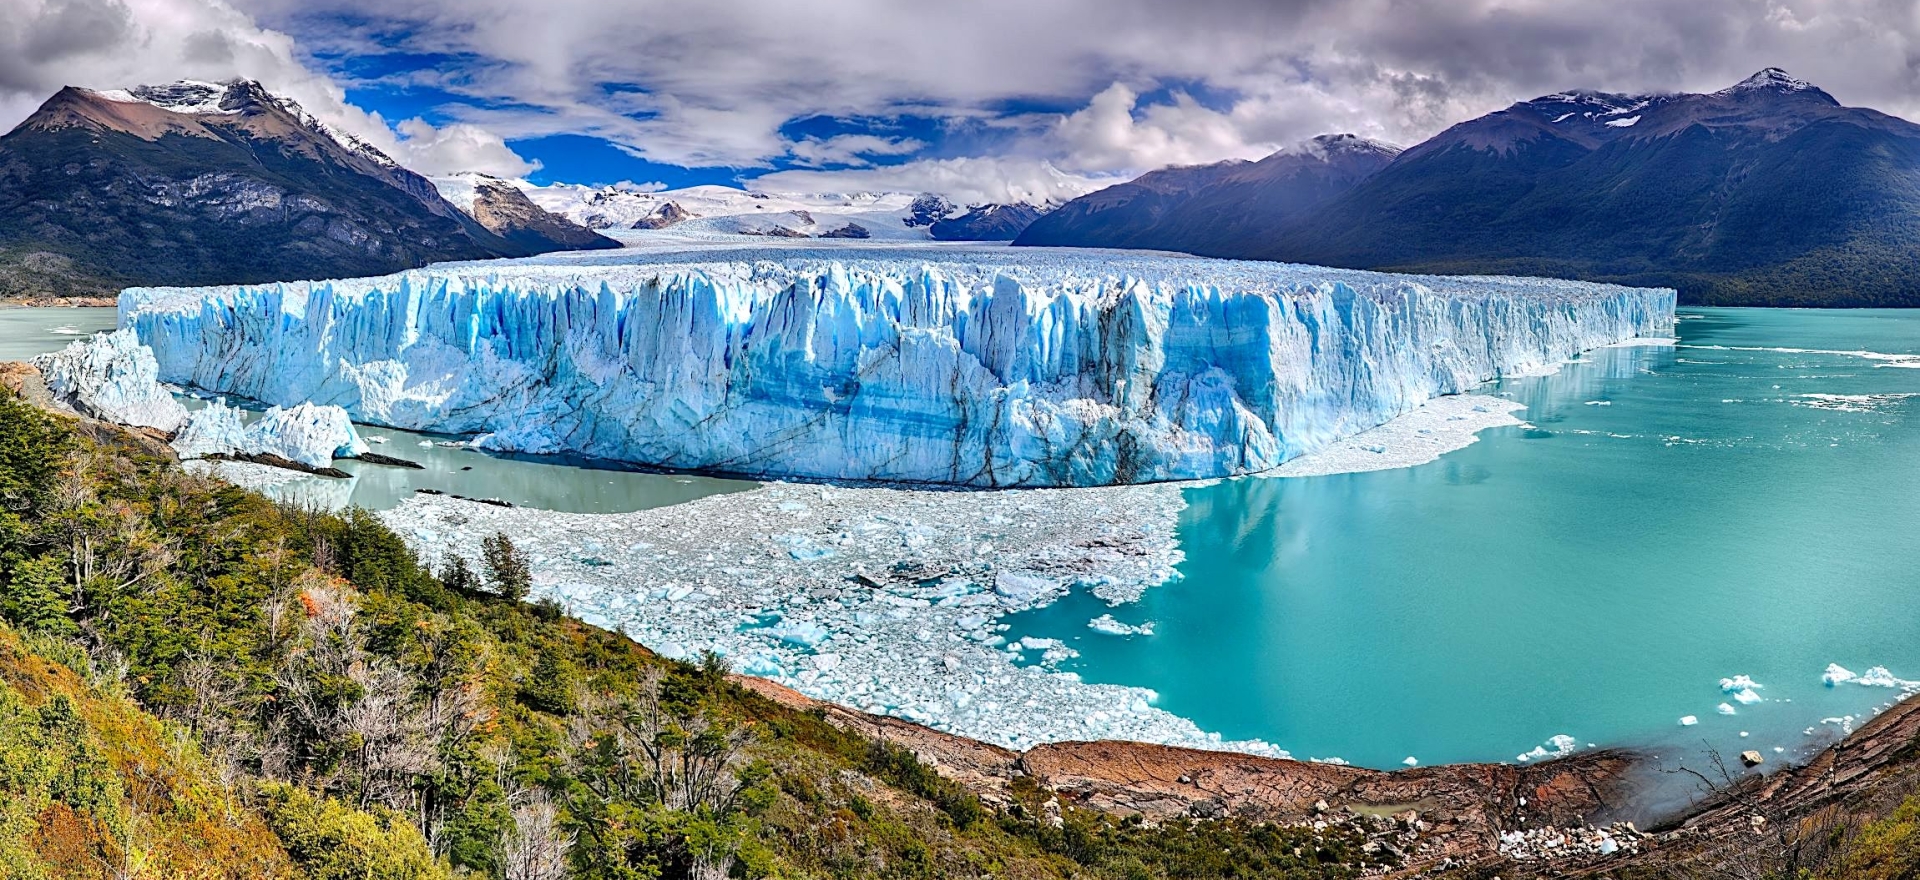 Perito Moreno Glacier nel parco nazionale Los Glaciares, Argentina. 